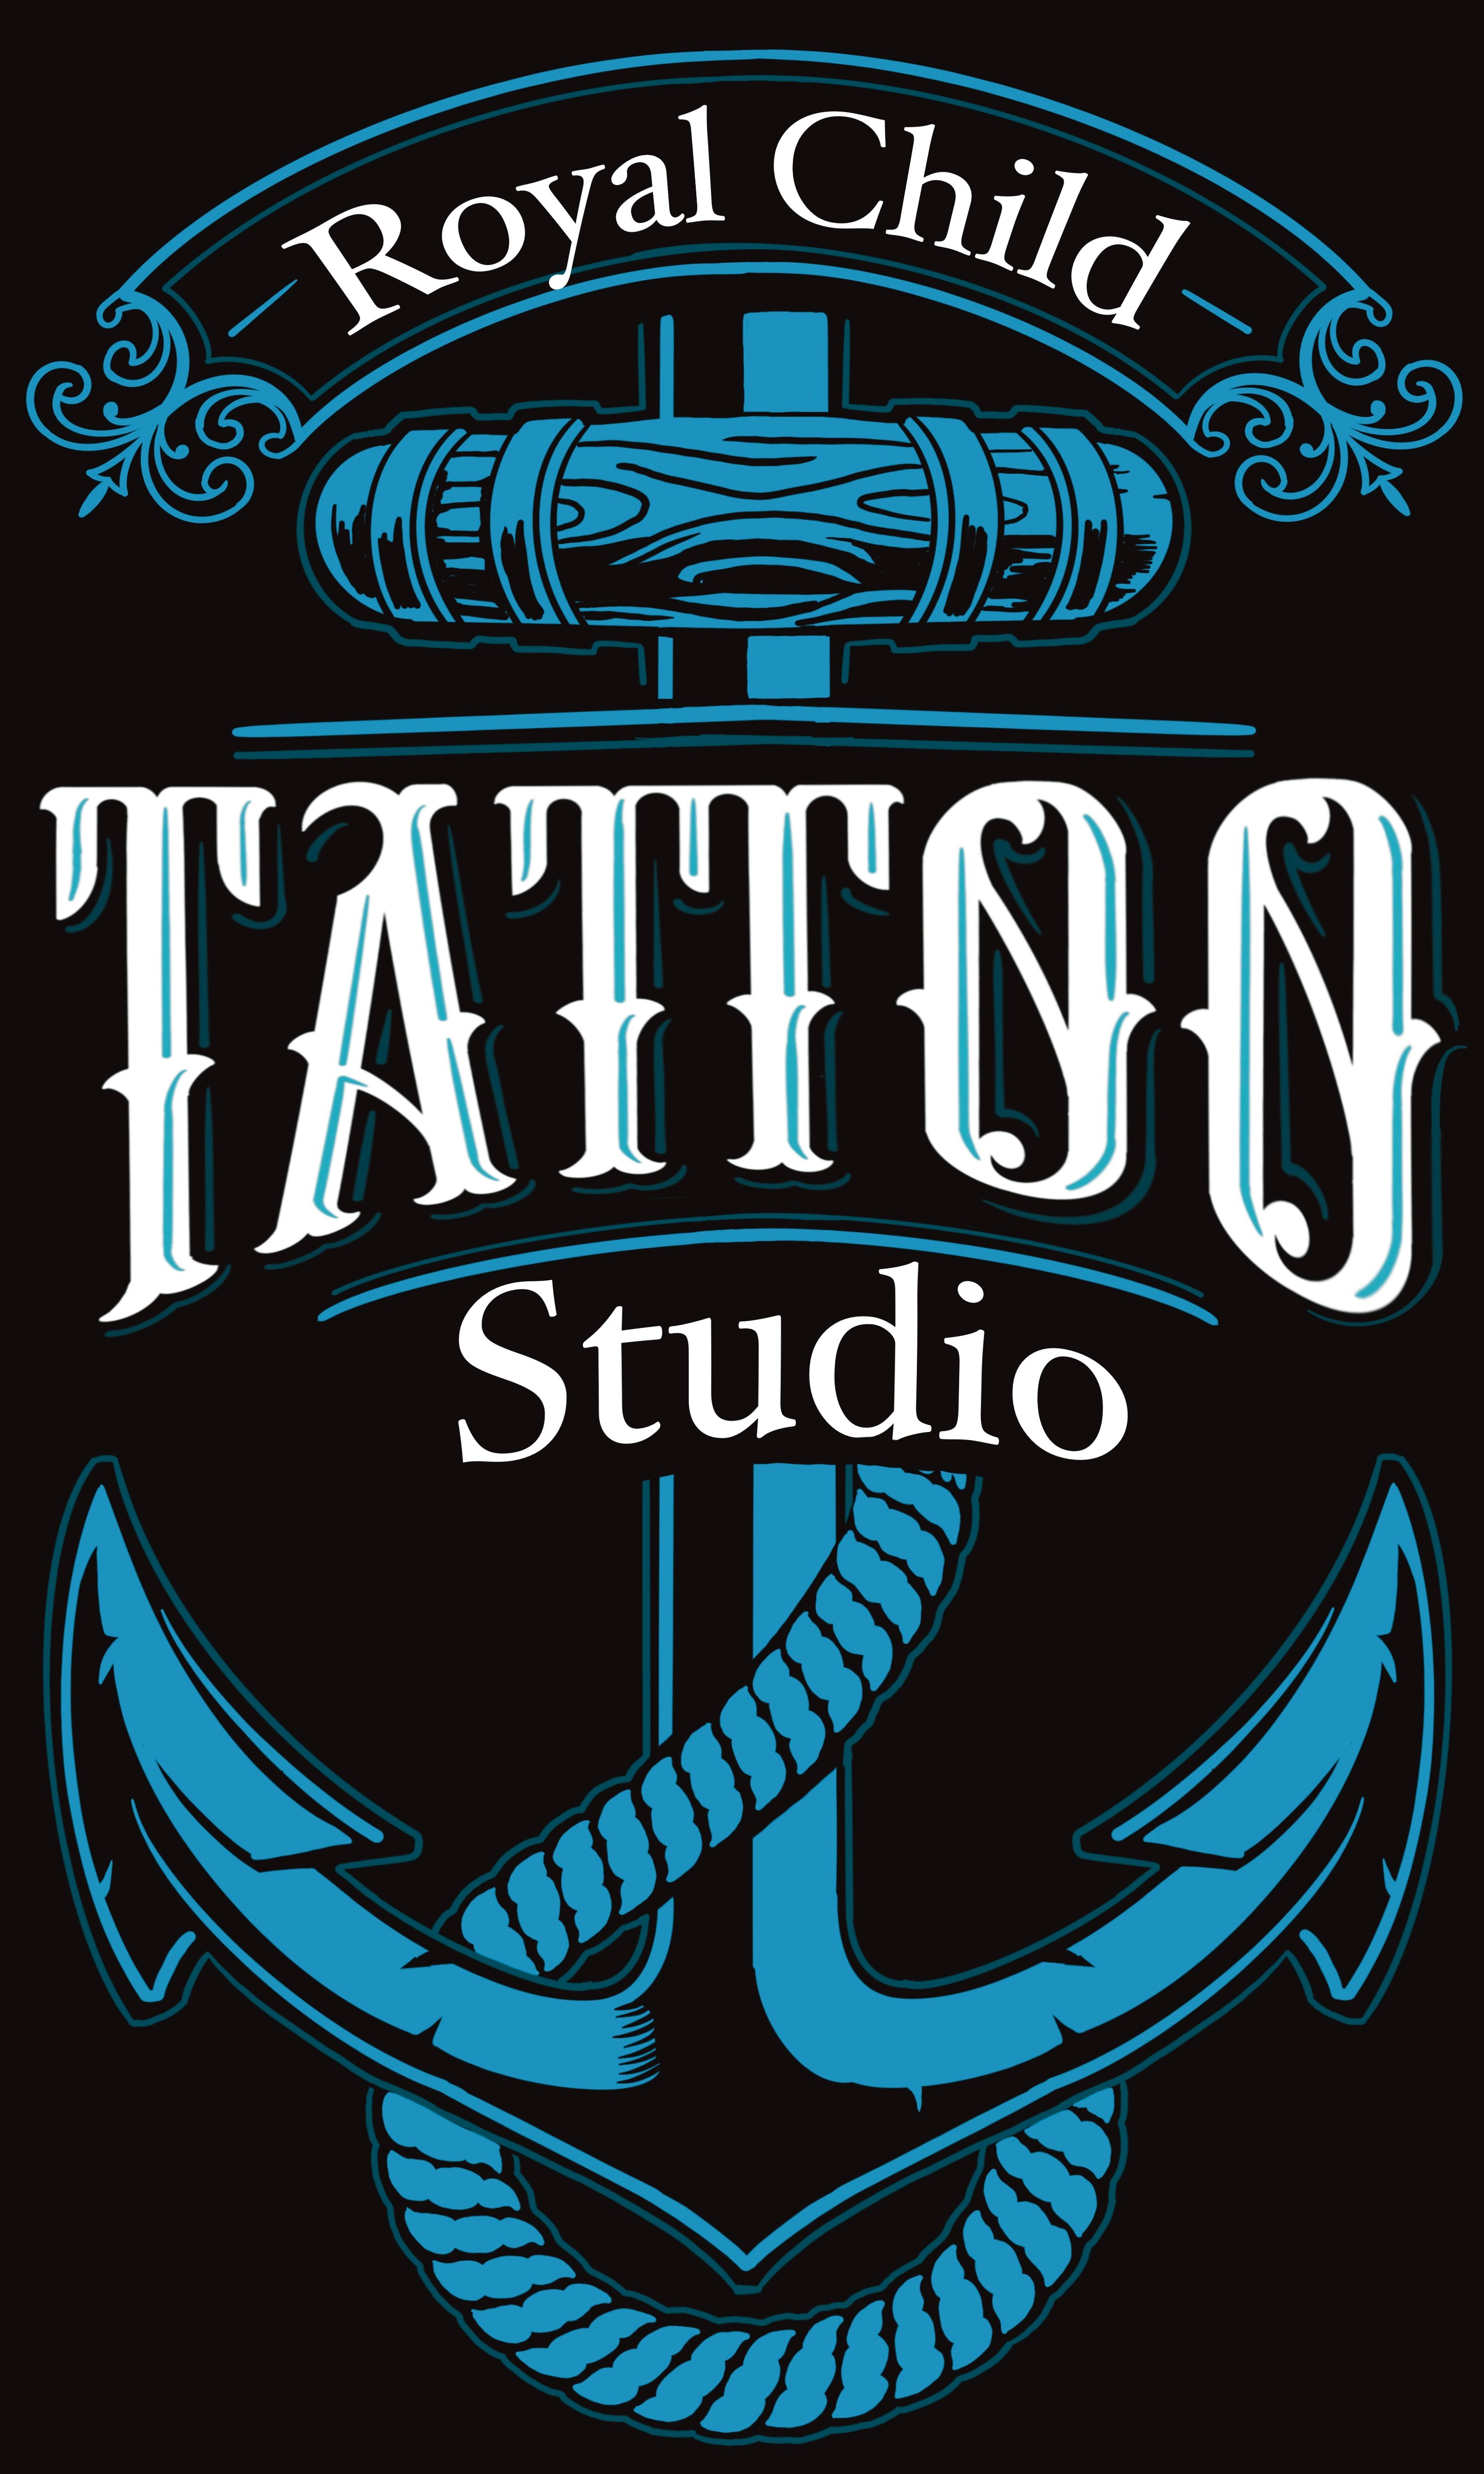 Royal Crown Tattoo Private studio